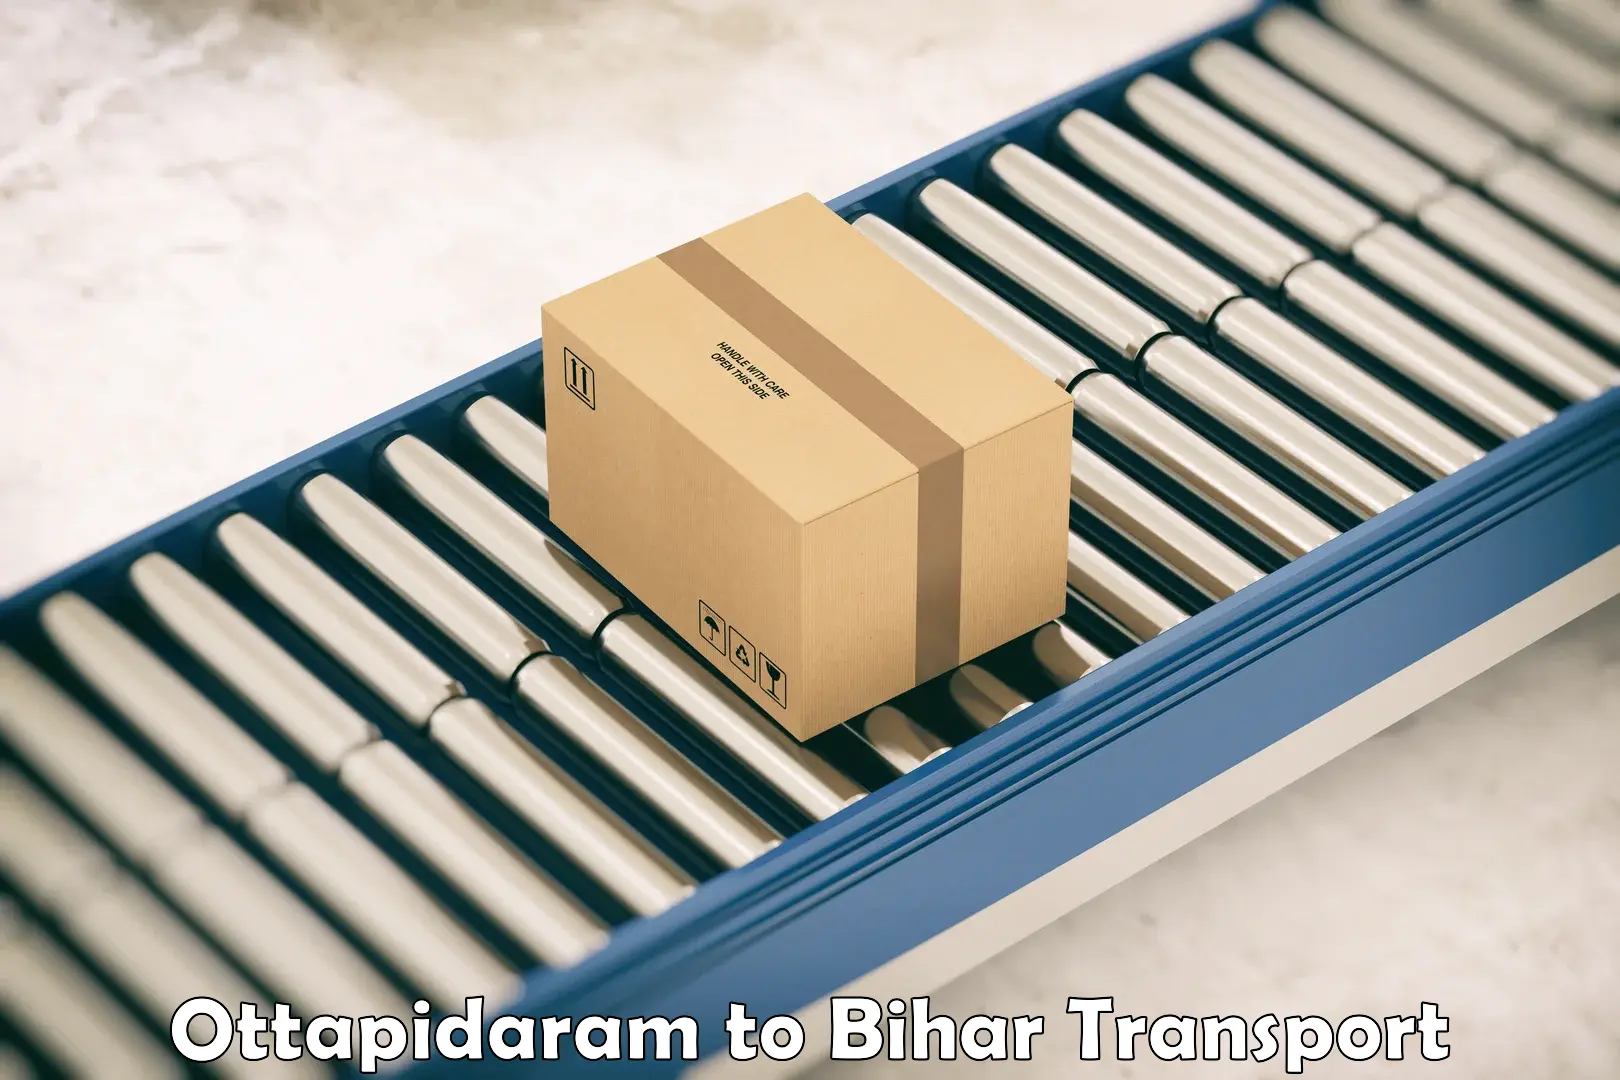 Furniture transport service Ottapidaram to Rusera